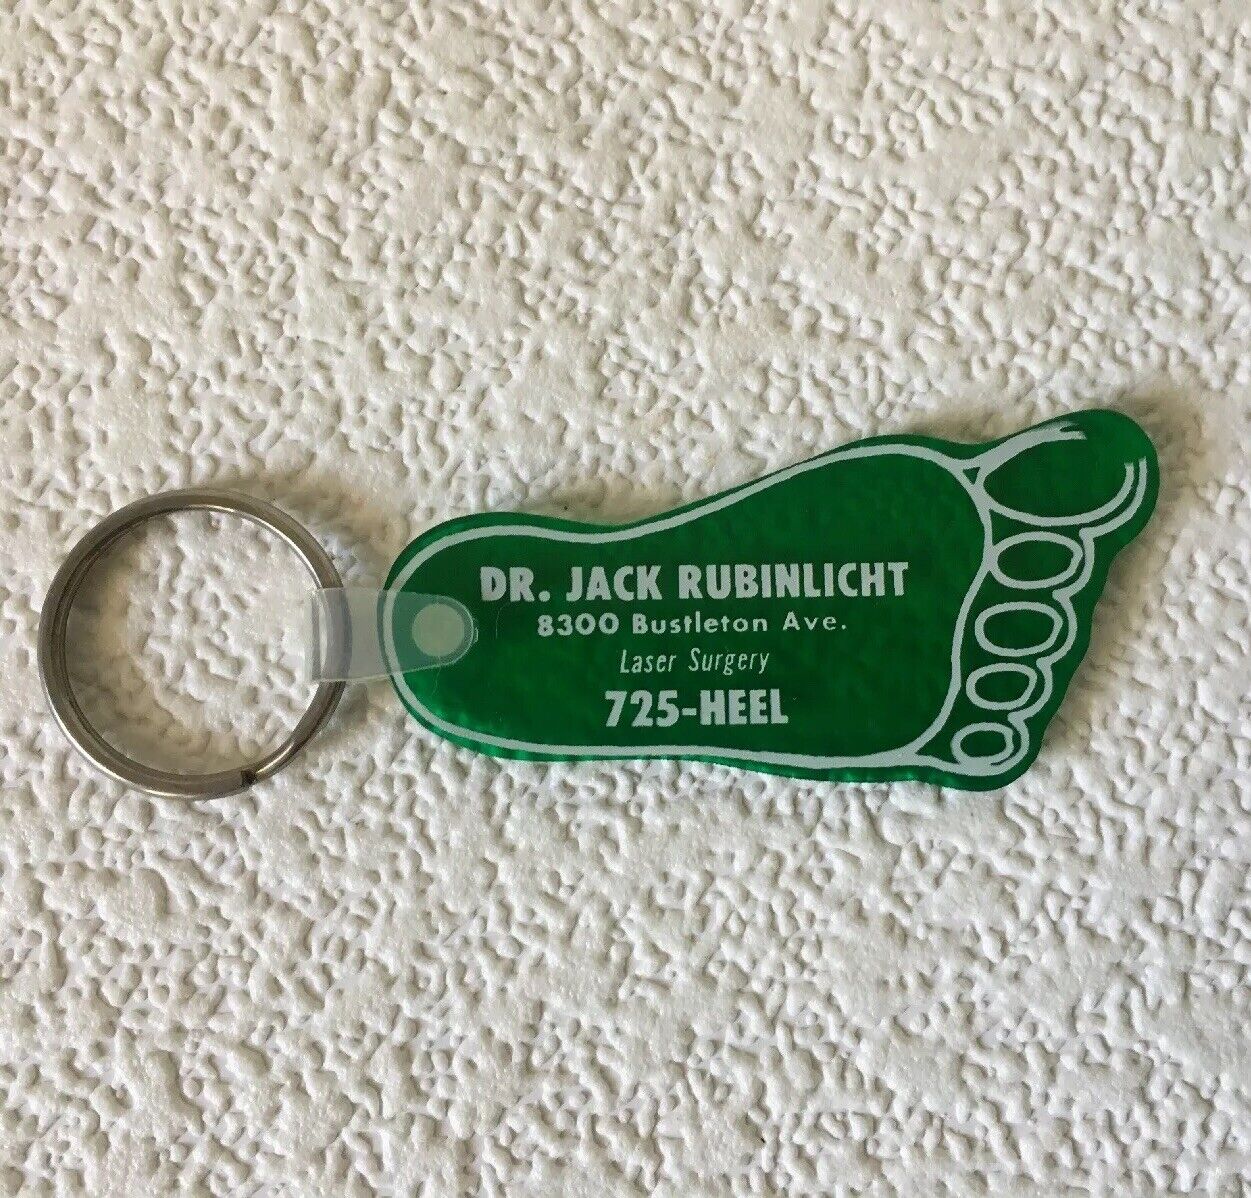 Vintage Keychain DR. JACK RUBINLICHT Key Ring Fob Podiatrist Foot Laser Surgery